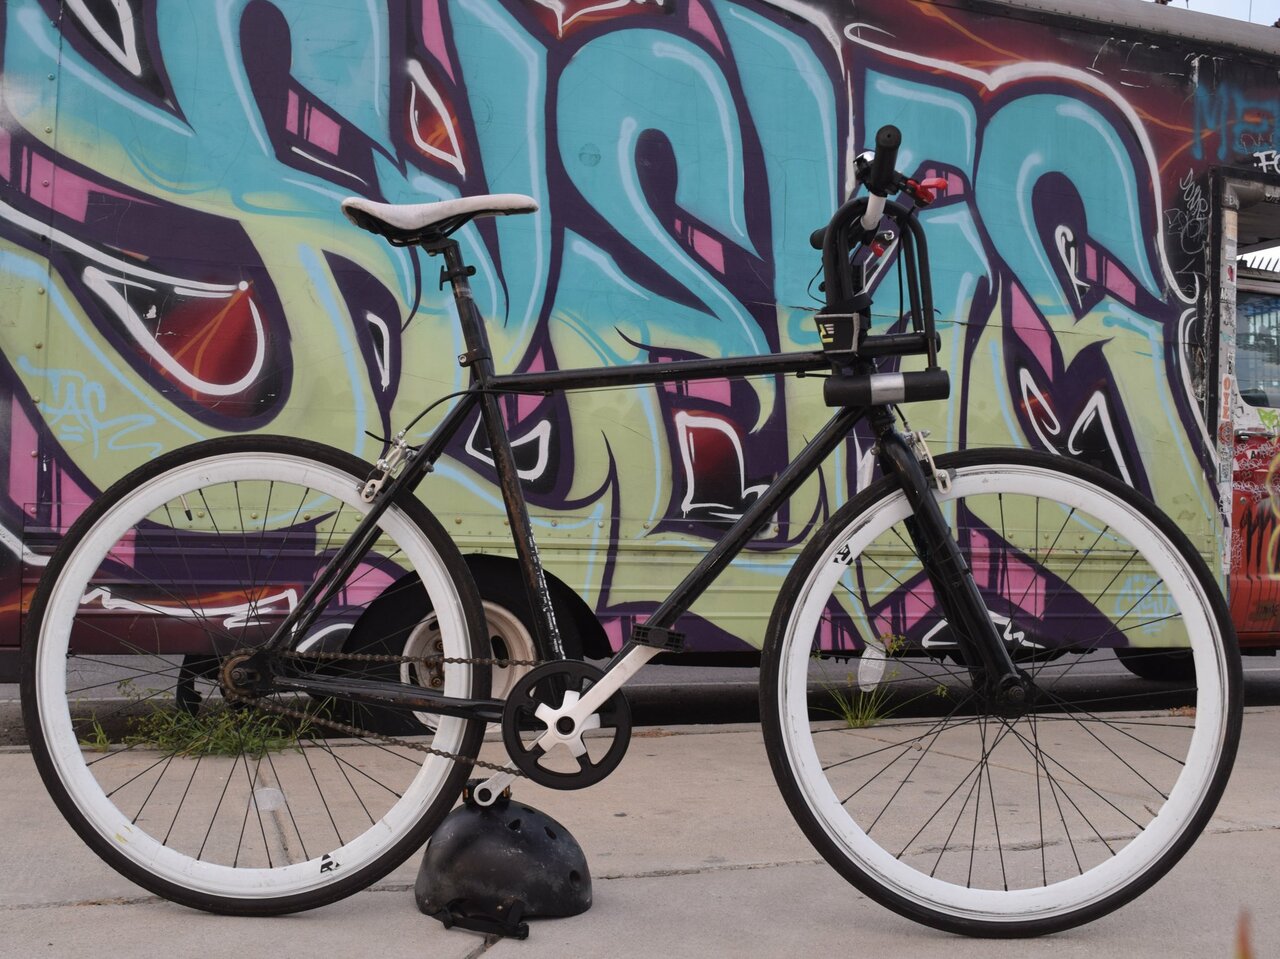 NewOrleans best #streetArt  #Bicycle.Media @Bananasocialmedia . #art #fixie #neworleans #bicycleandre https://t.co/llaZbAz0dq